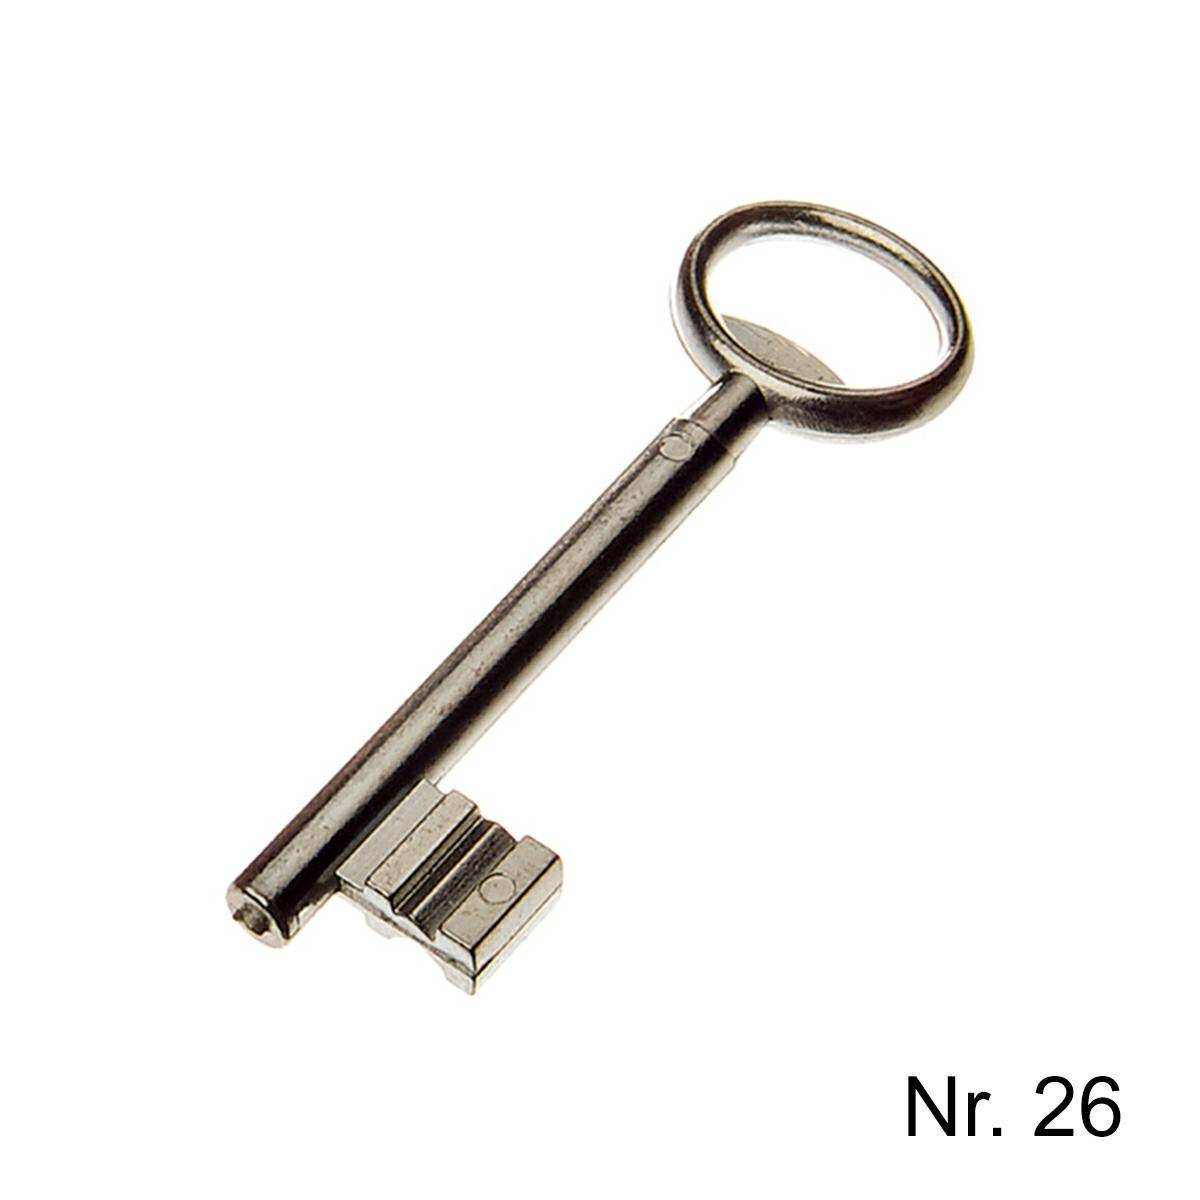 Cast key - Jania - for the lock - No. 26